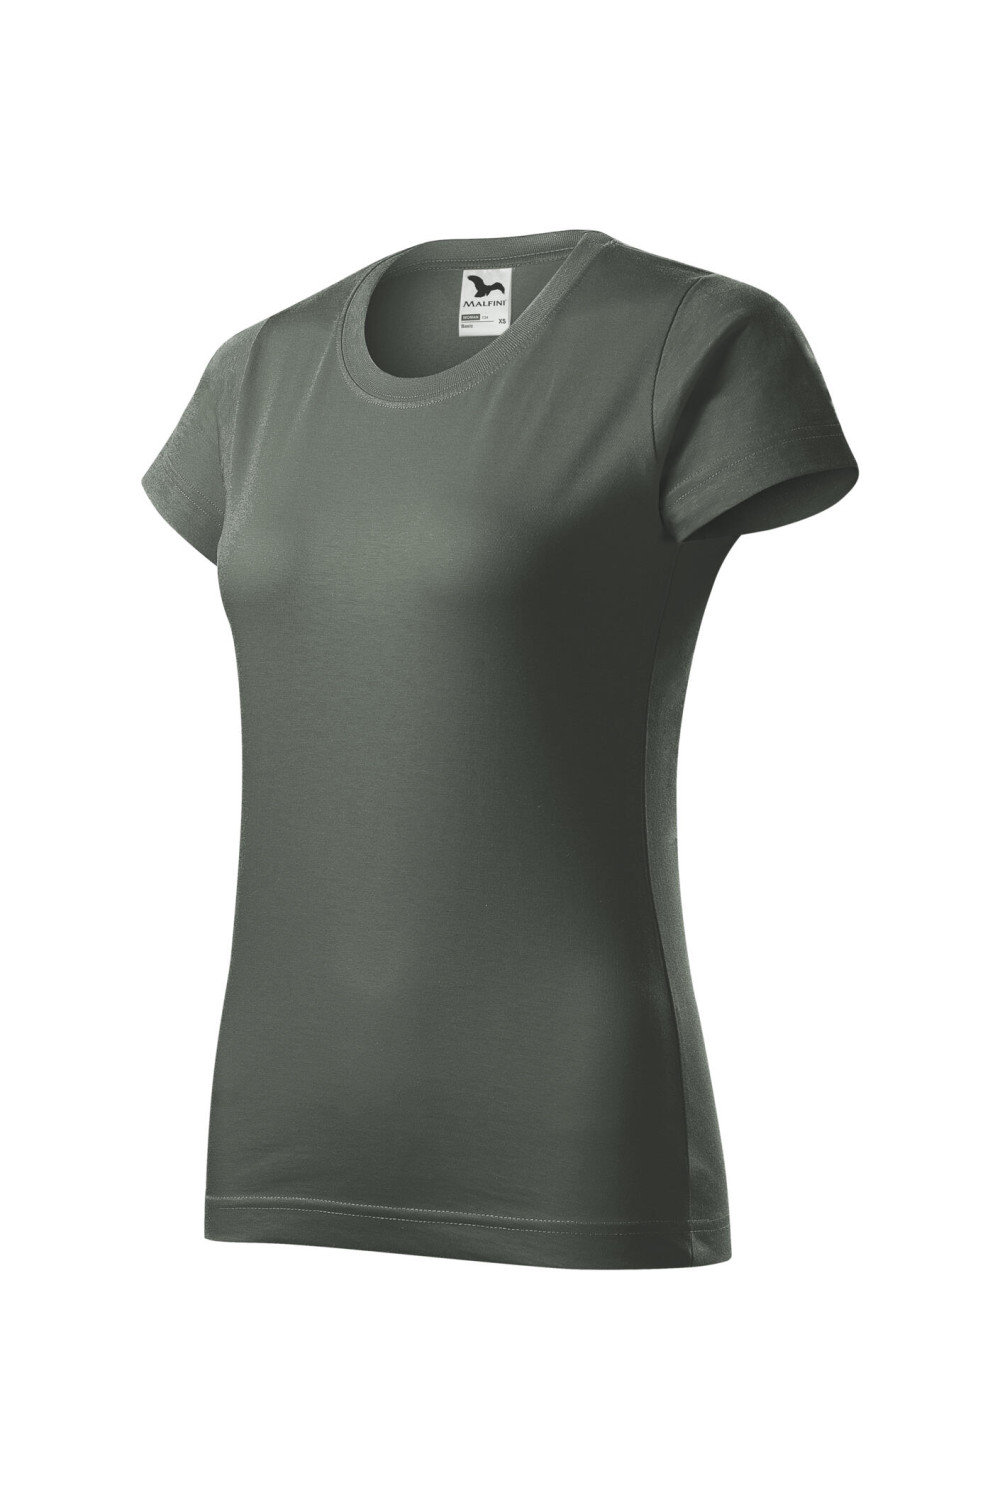 BASIC 134 MALFINI Koszulka damska 100% bawełna t-shirt ciemny khaki